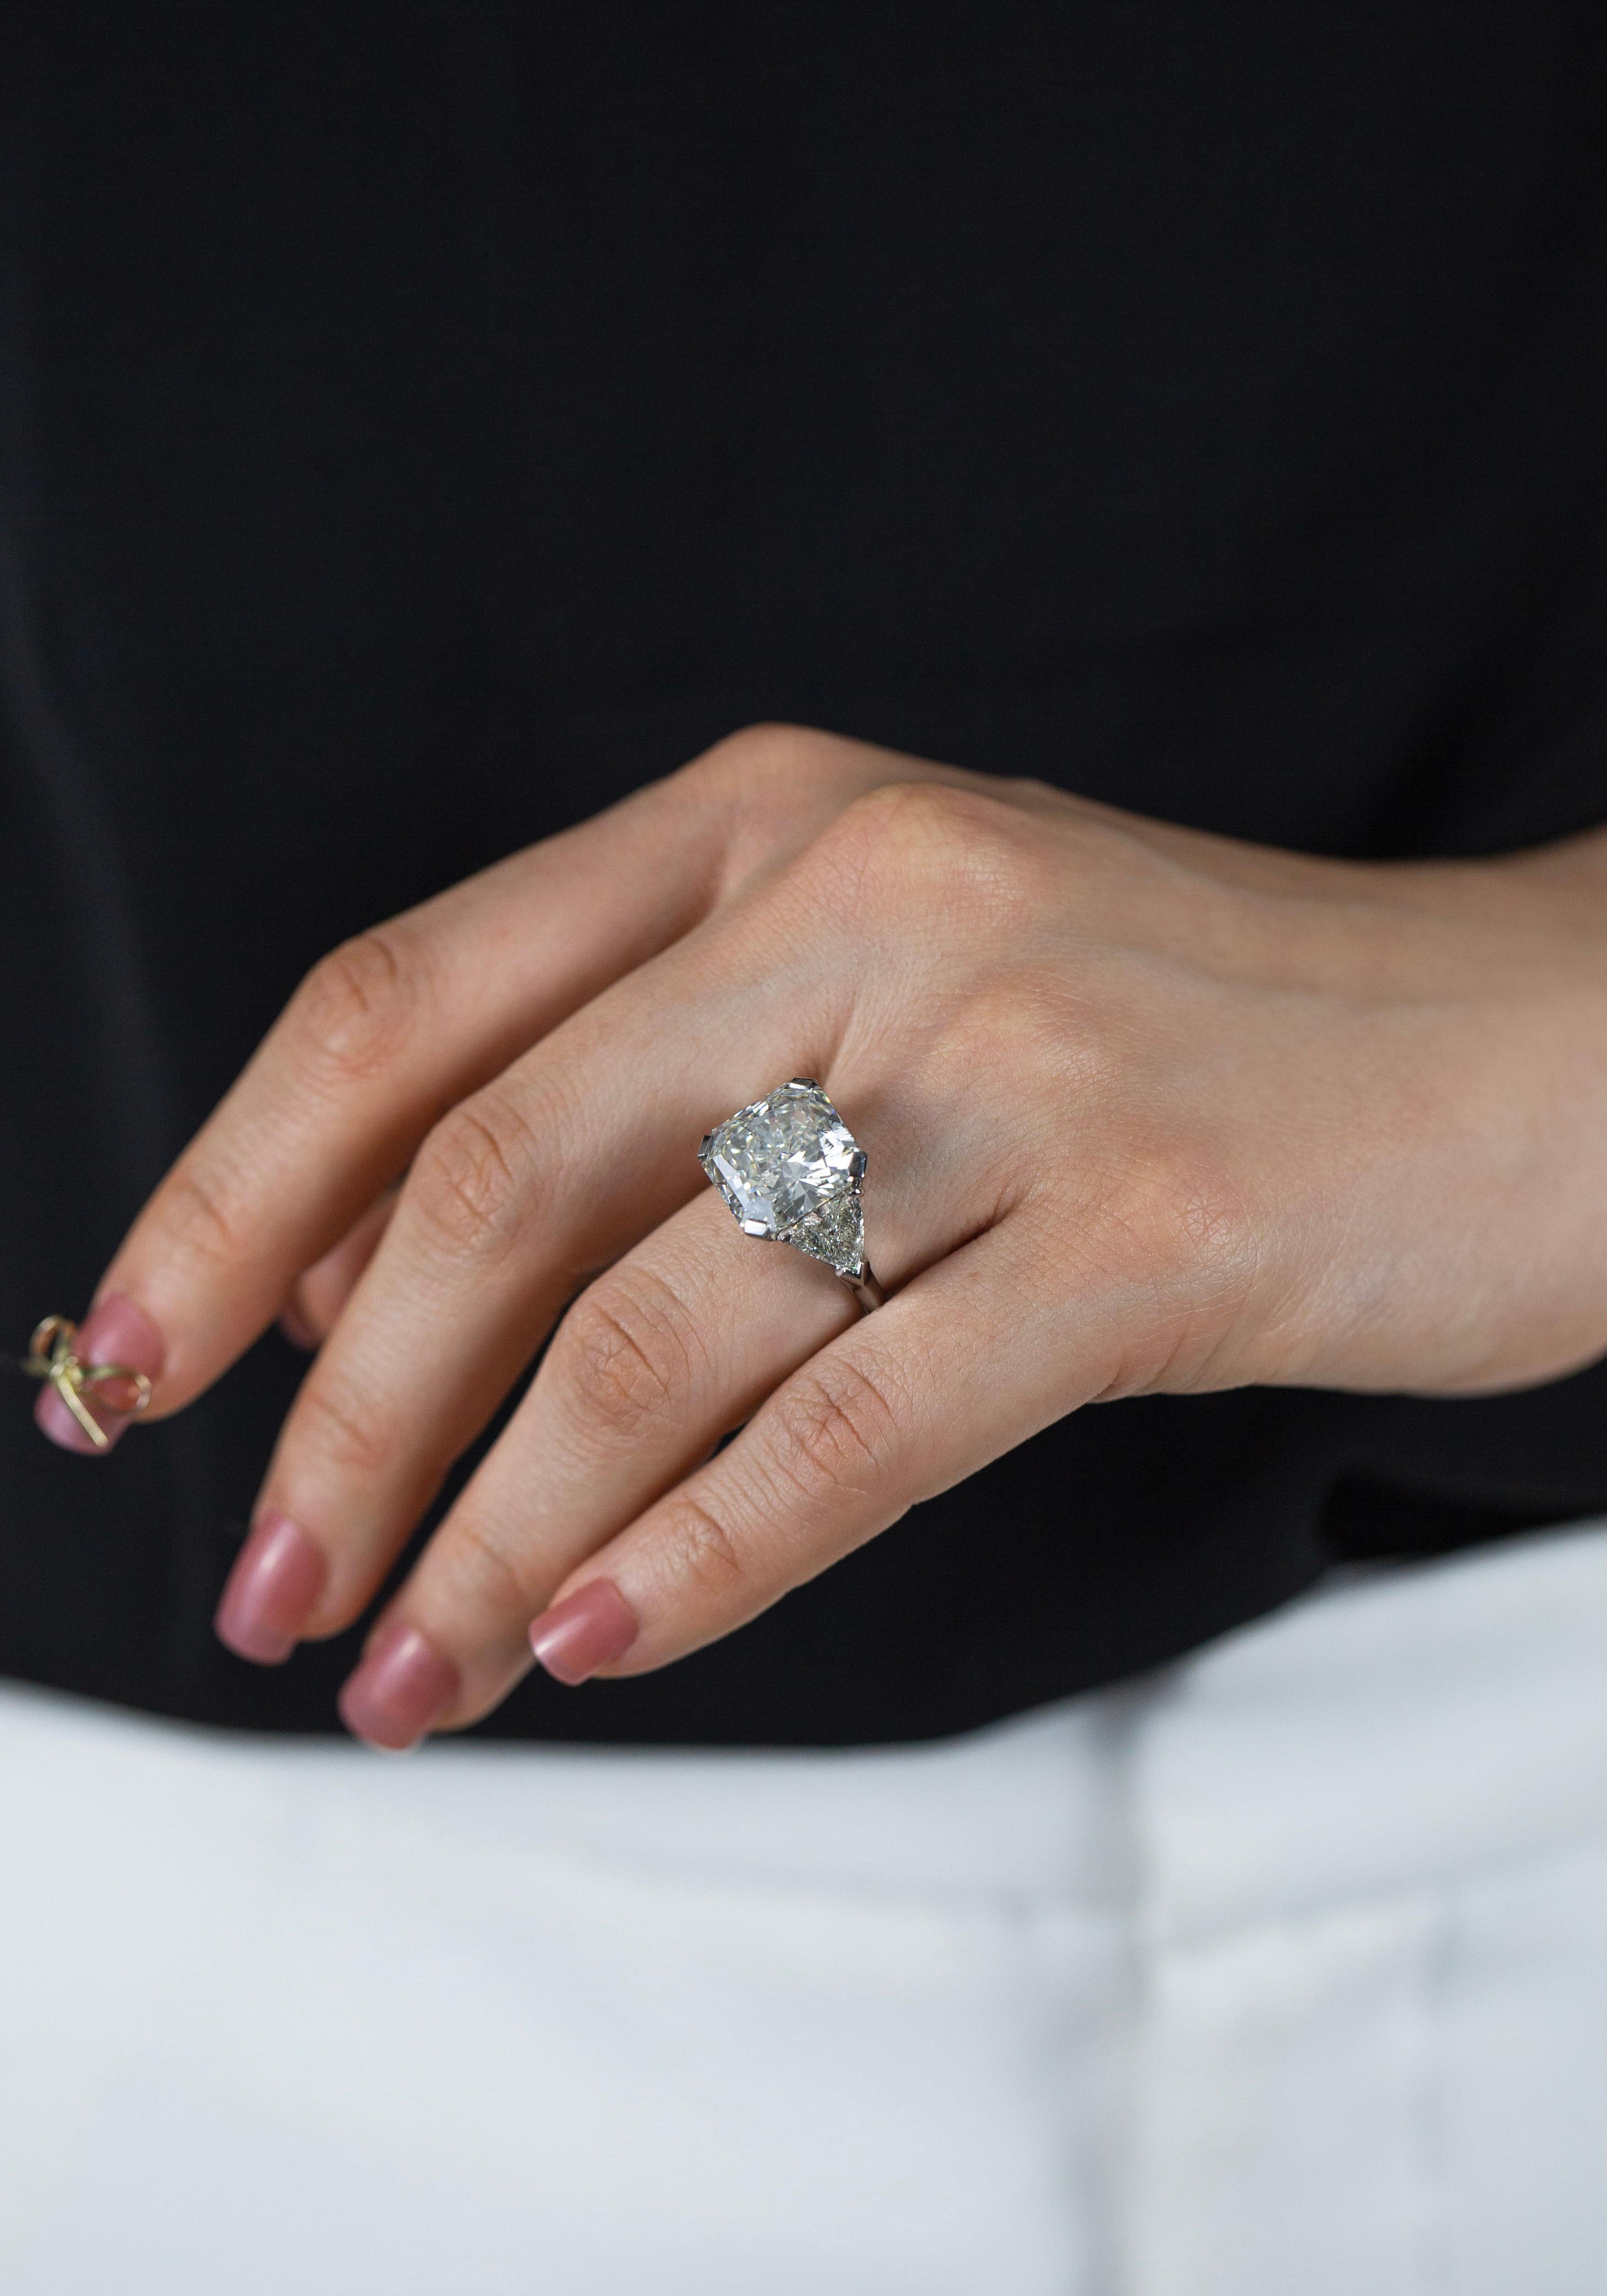 10 carat radiant cut diamond ring